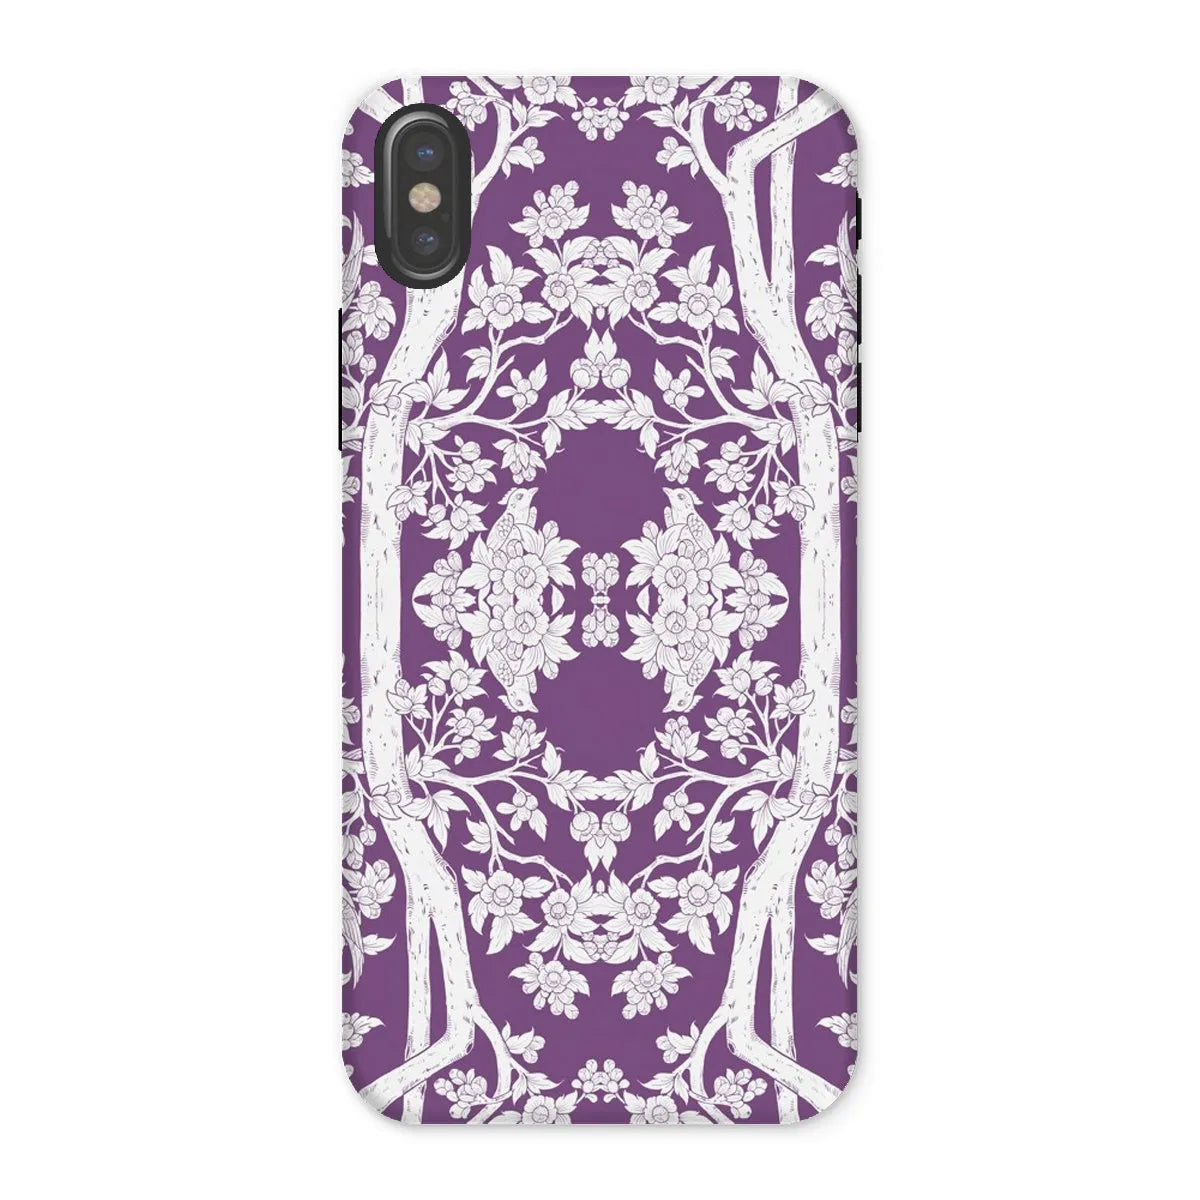 Aviary Purple Aesthetic Pattern Art Phone Case - Iphone x / Matte - Mobile Phone Cases - Aesthetic Art